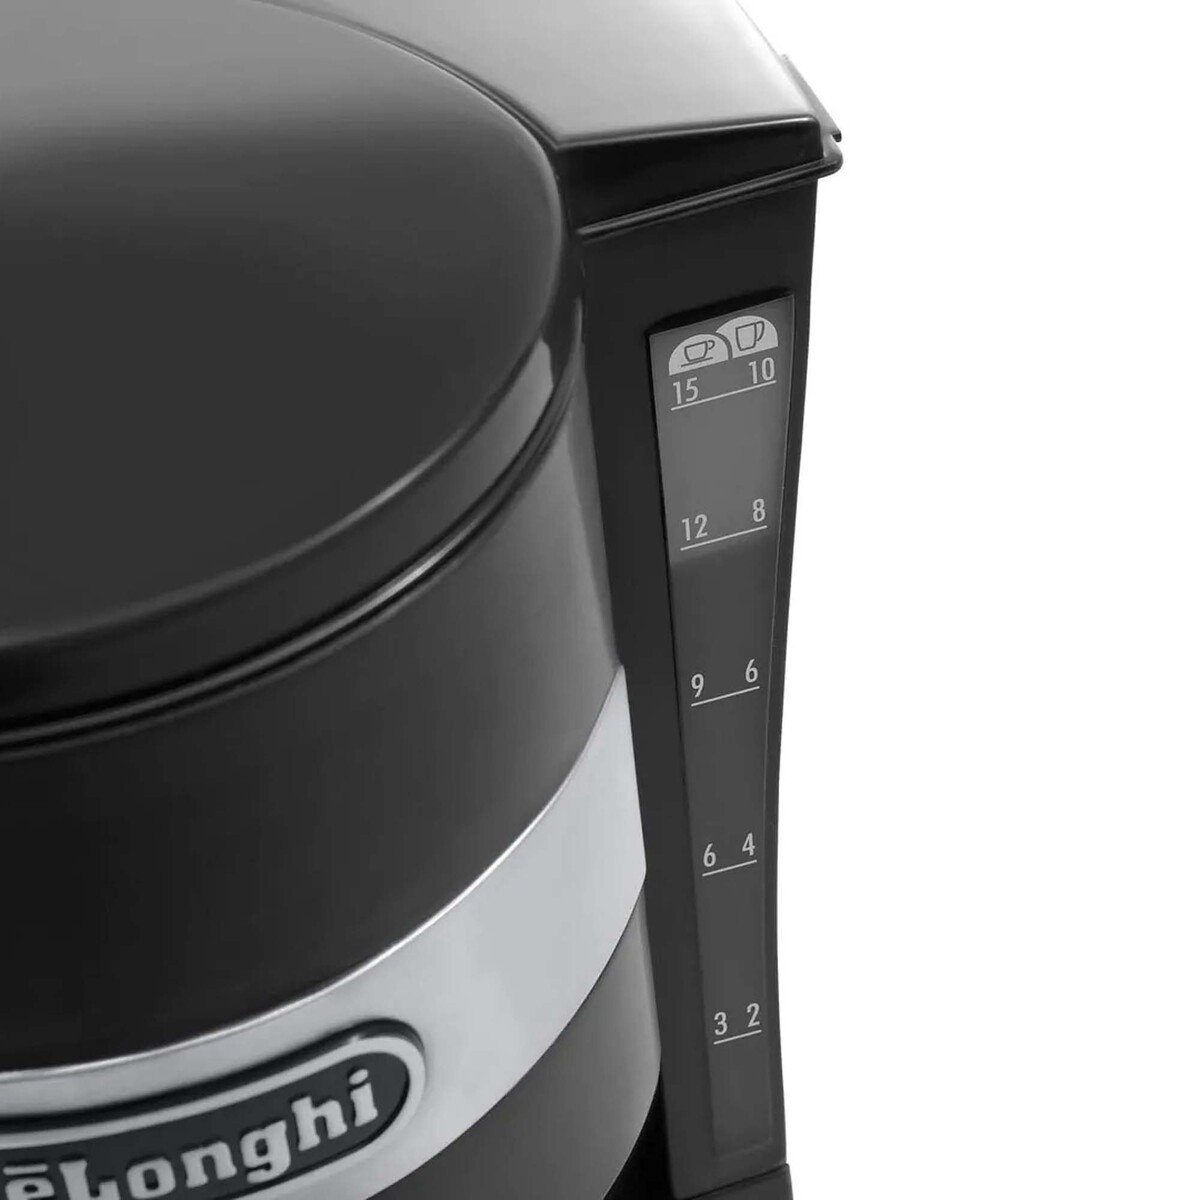 Delonghi Coffee Maker ICM15211